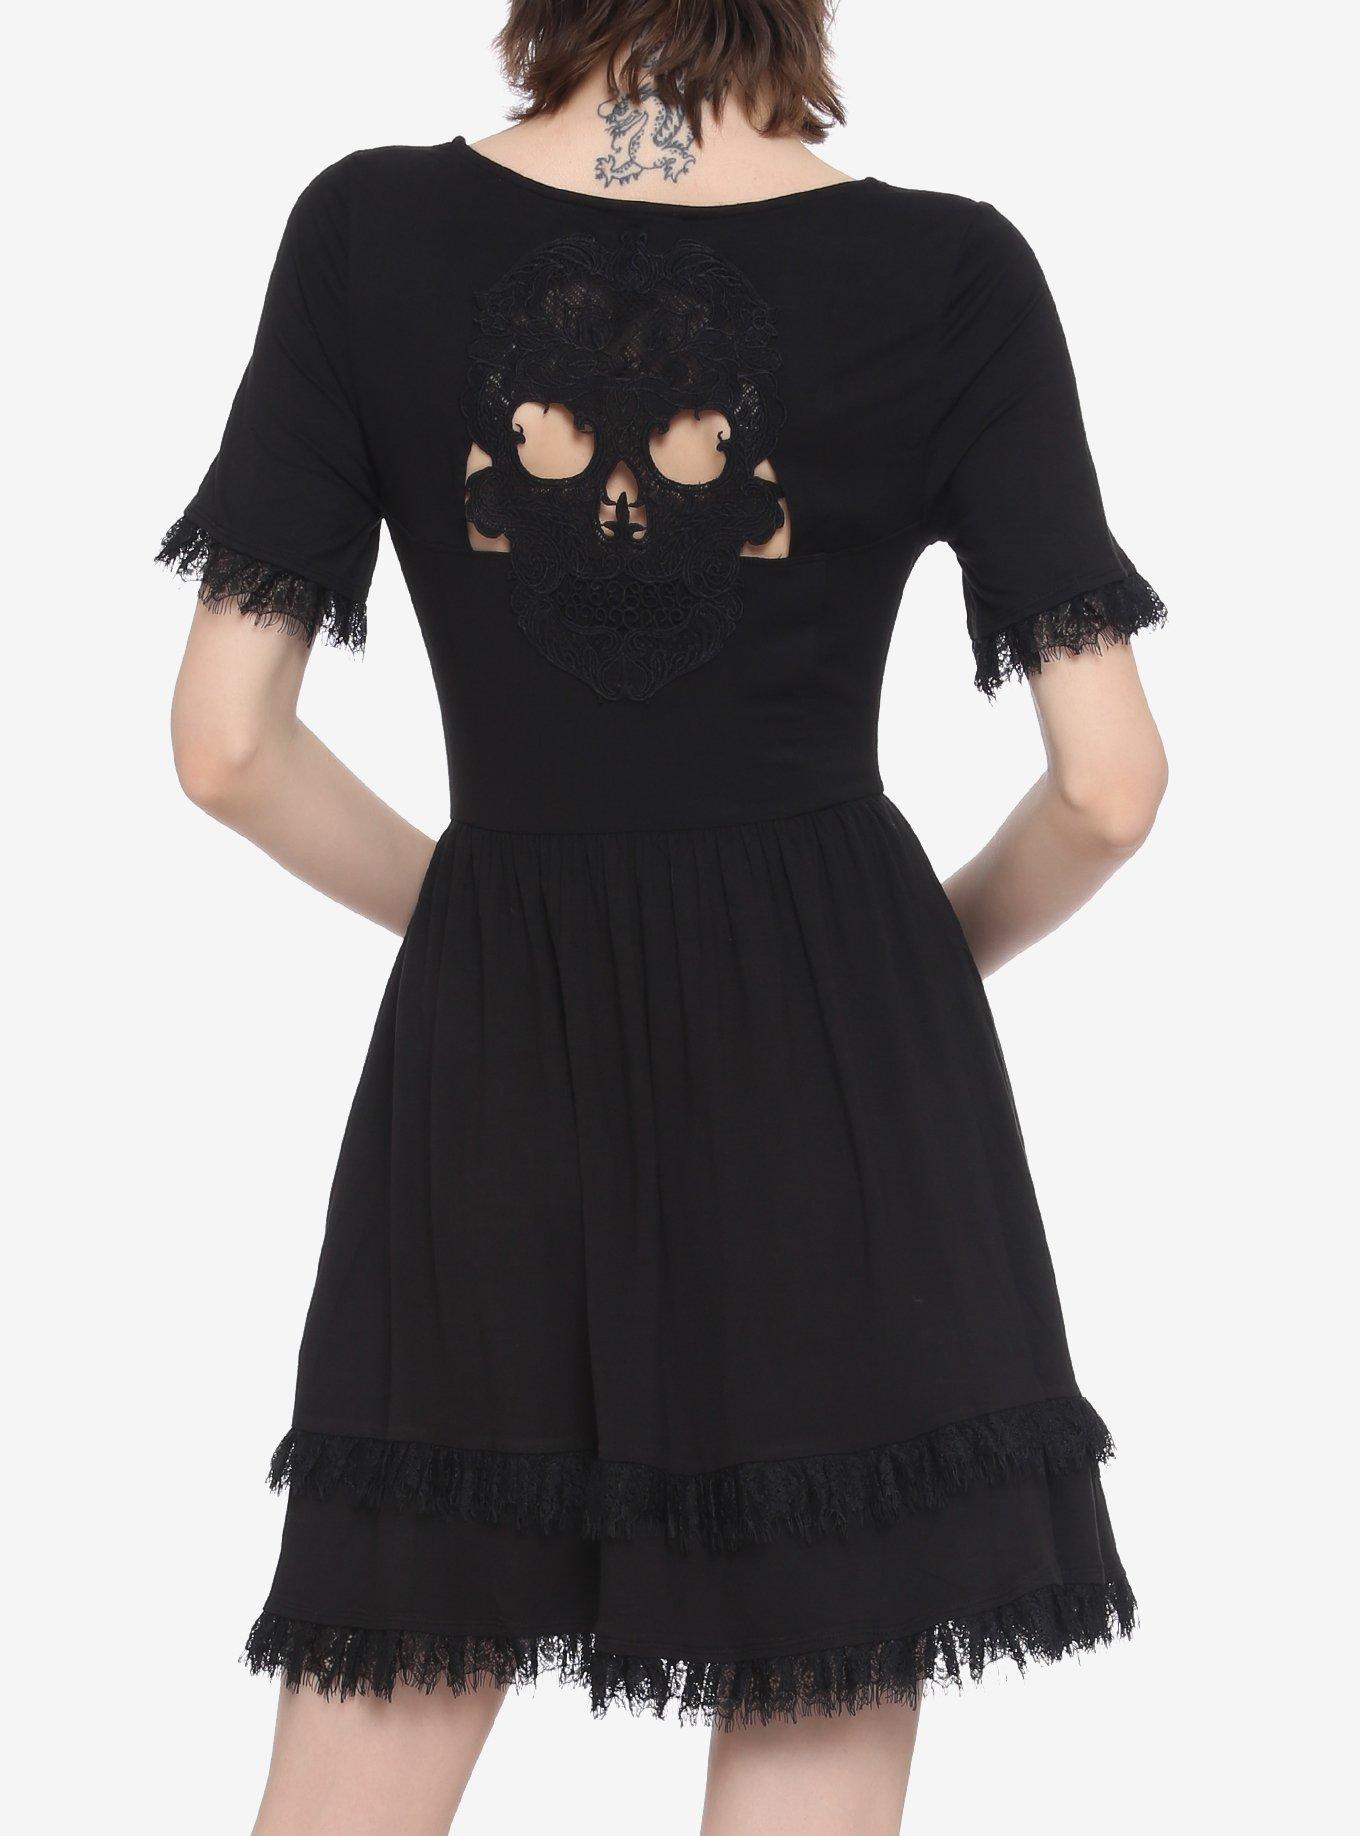 Black Skull Back Ruffles & Lace Dress, BLACK, alternate